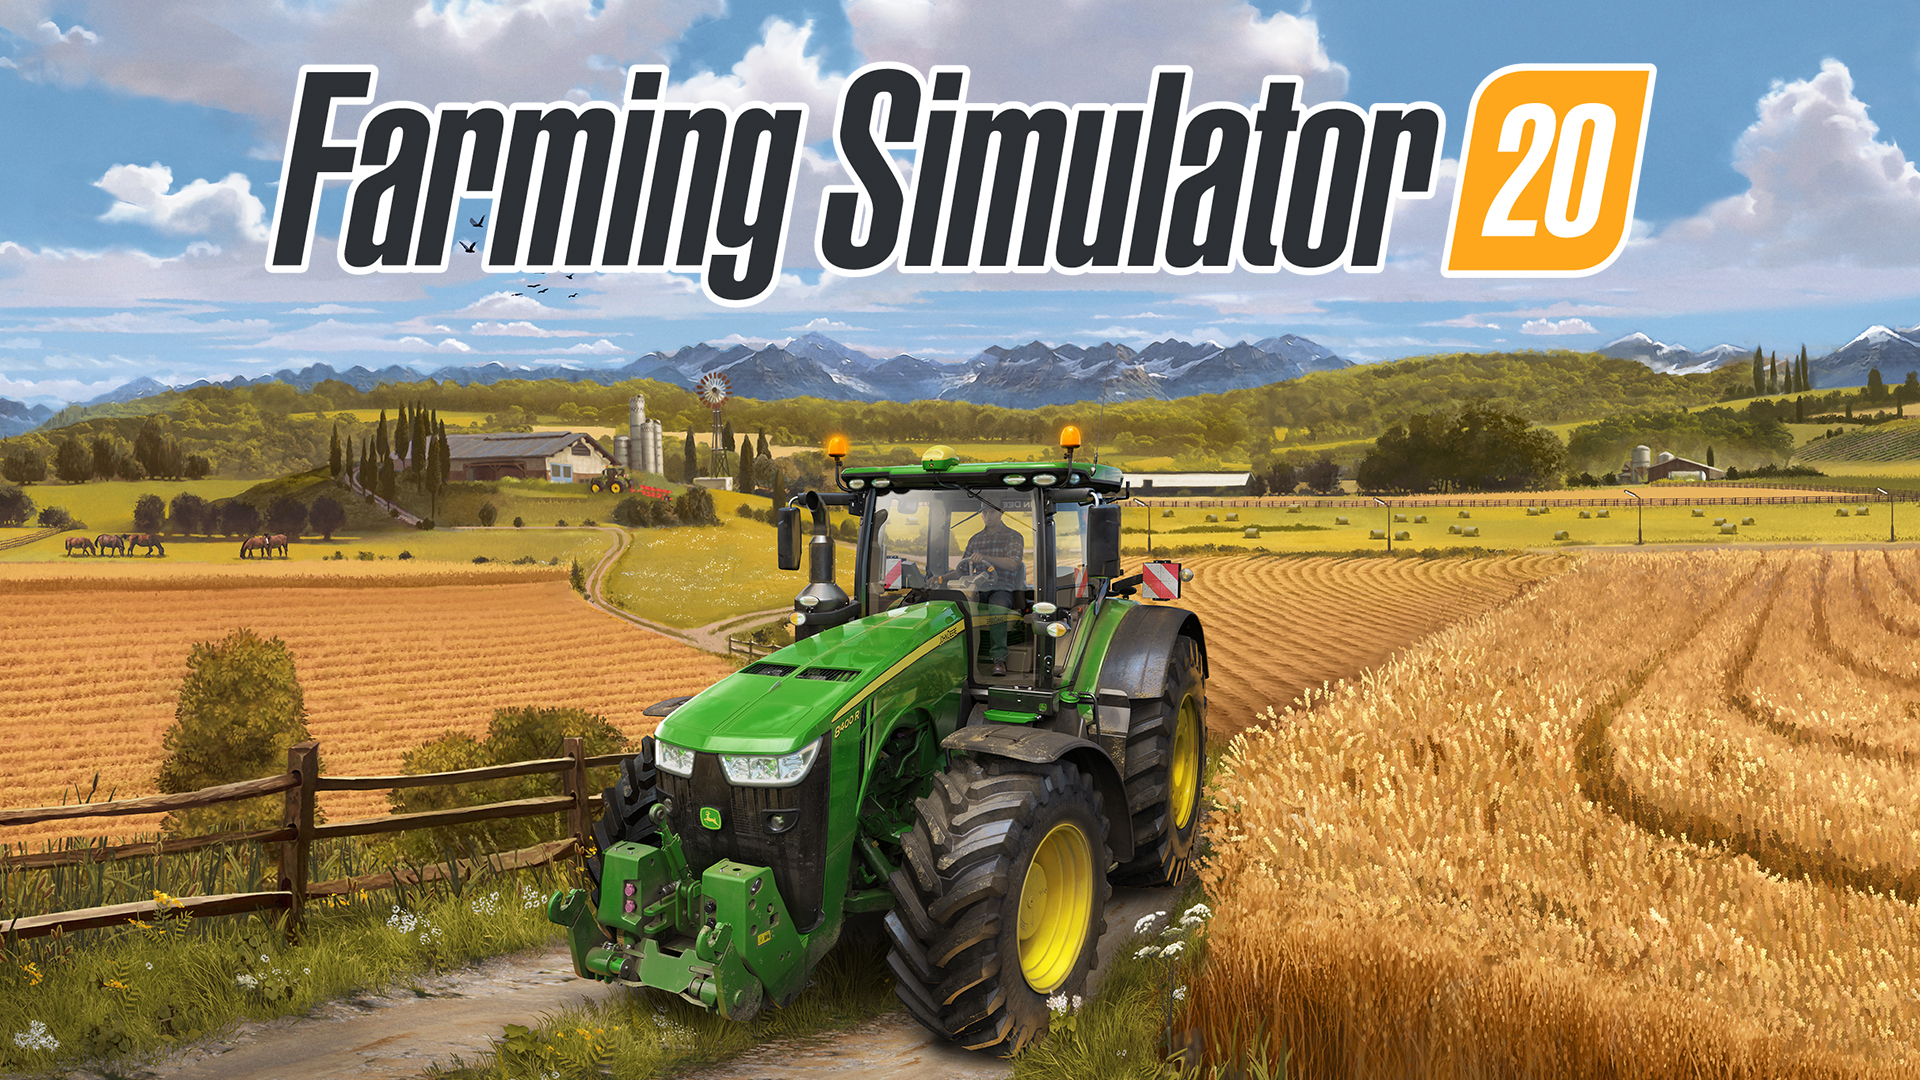 Farming Simulator 20 poster